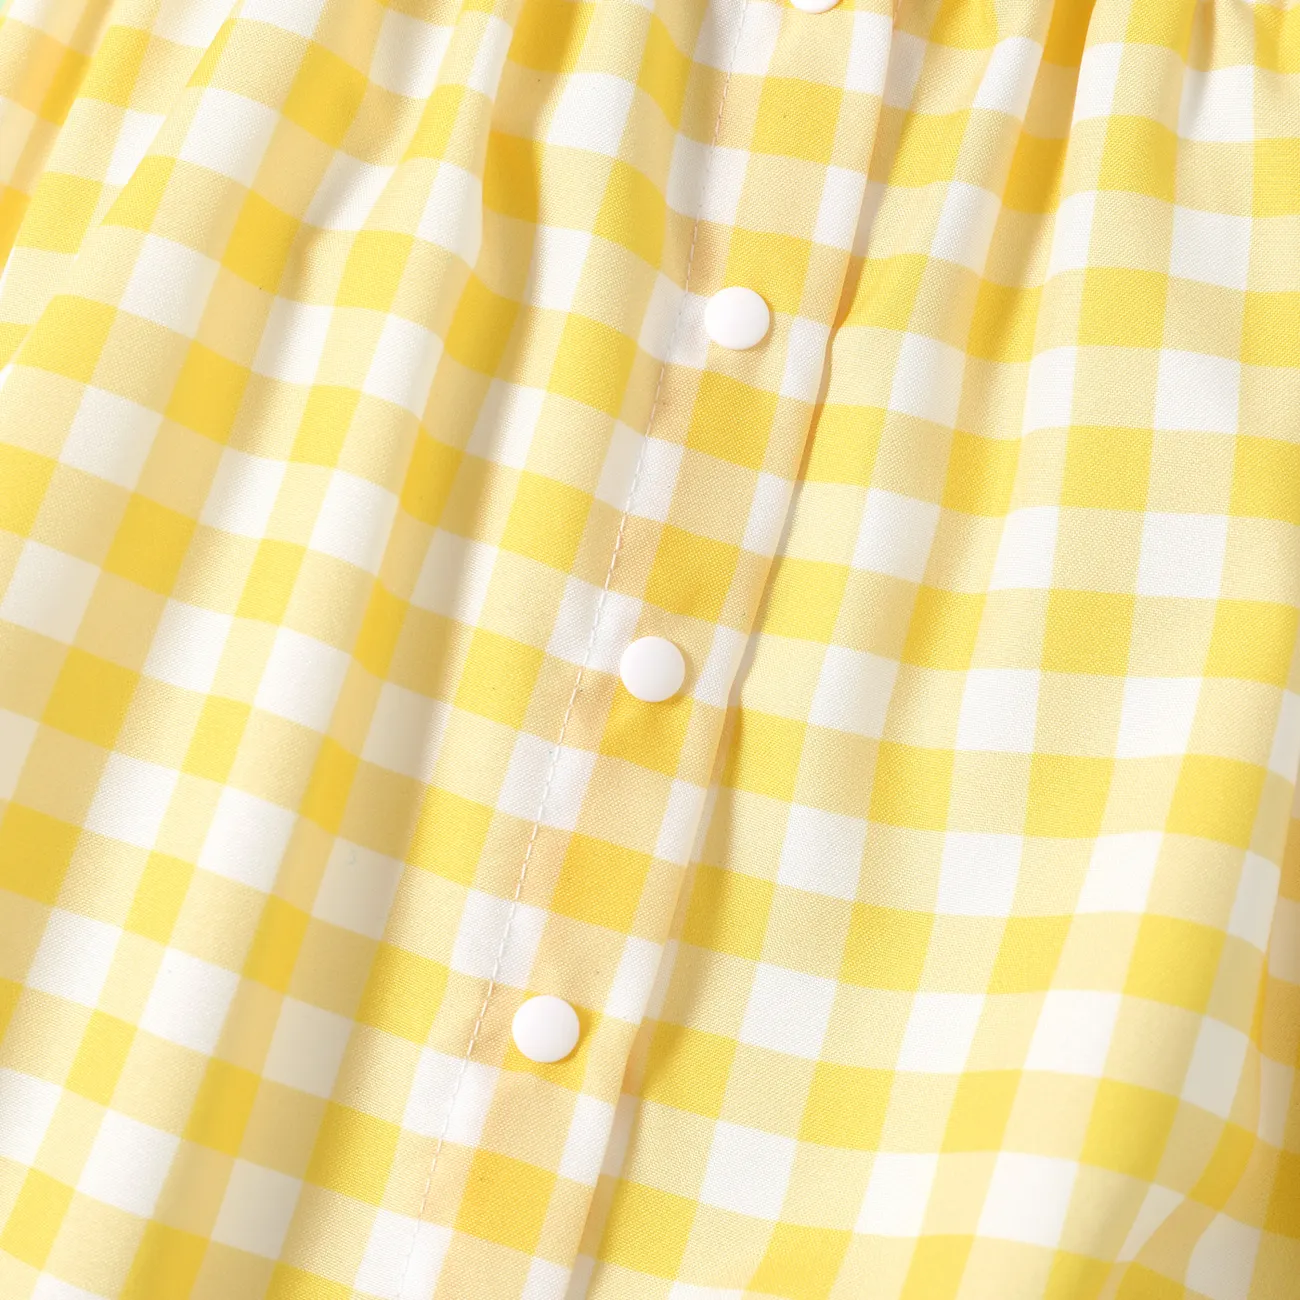 Baby Girl Allover Yellow Plaid/Lemon Print Flutter-sleeve Snap Romper Yellow big image 1